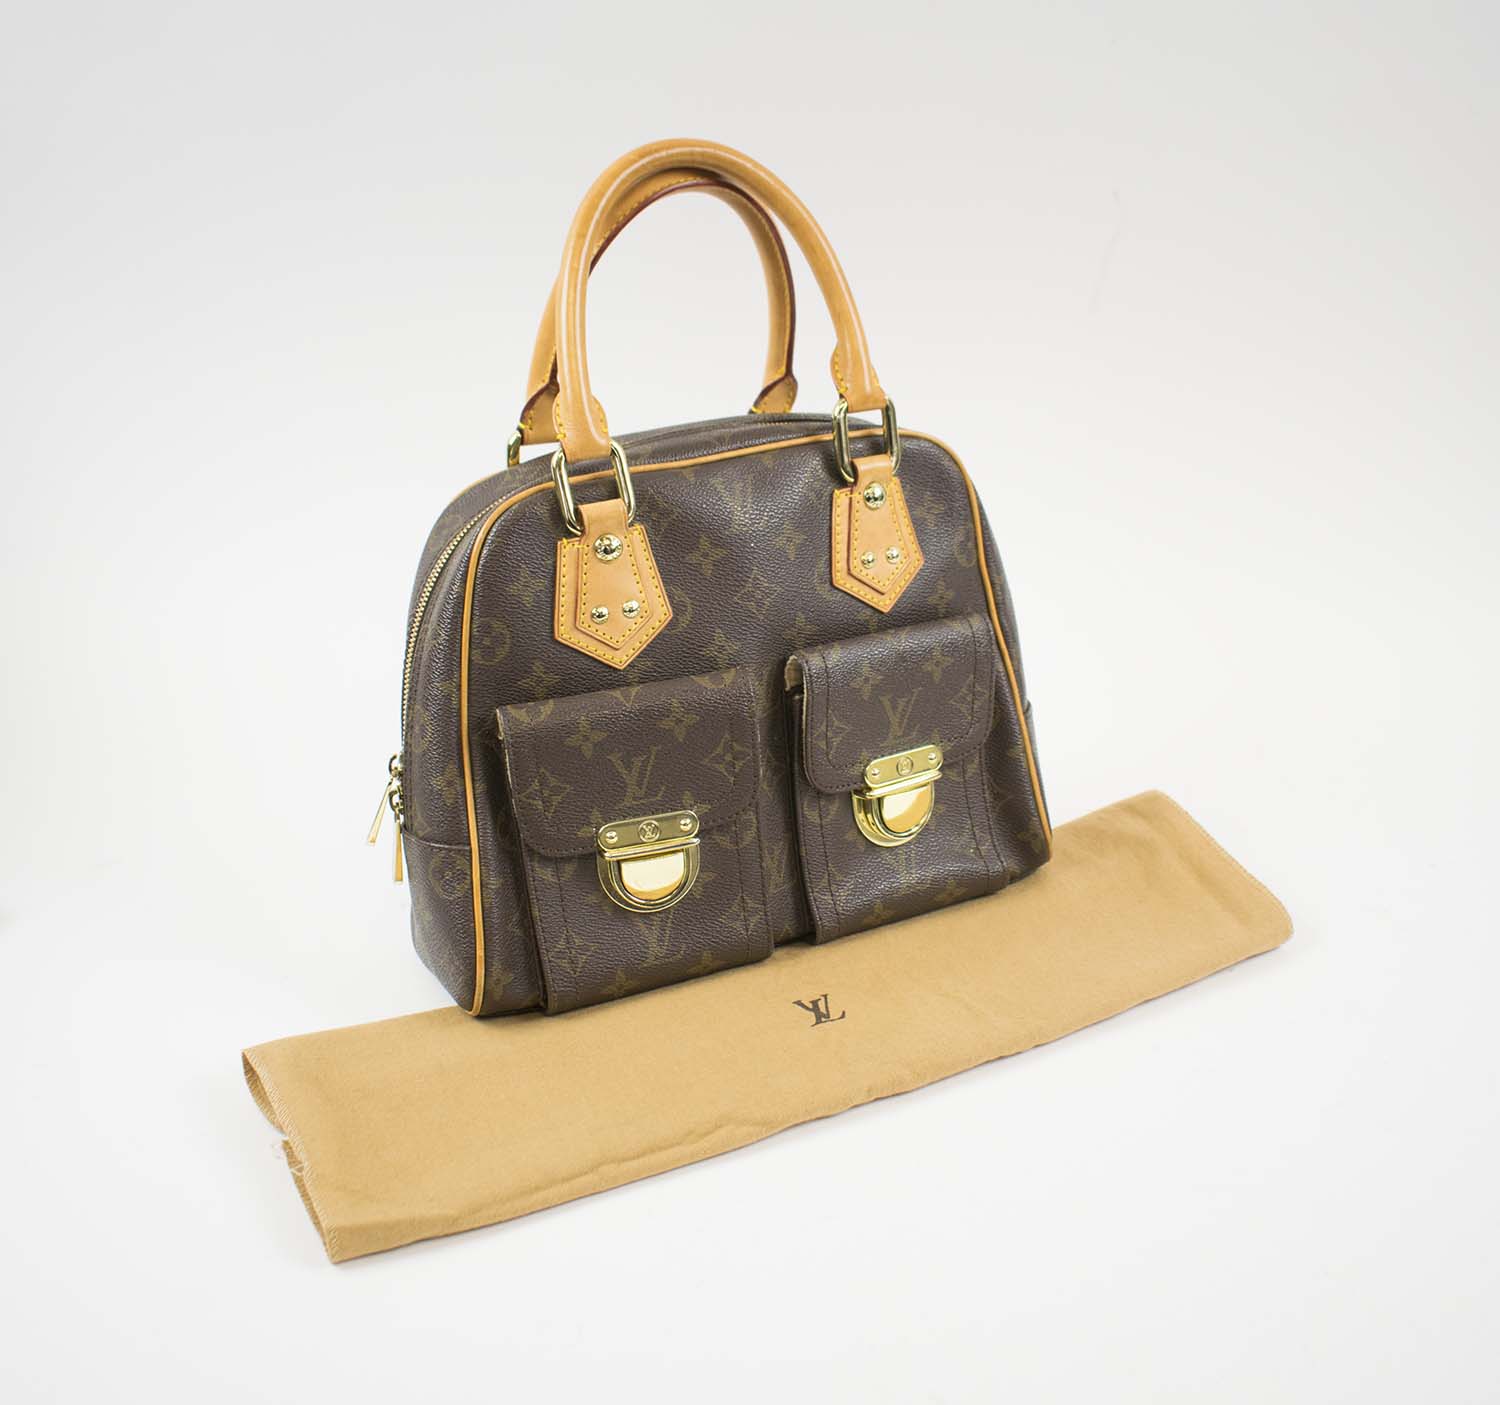 LOUIS VUITTON MANHATTAN PM BAG, monogram with leather handles and trims, beige alcantara lining ...